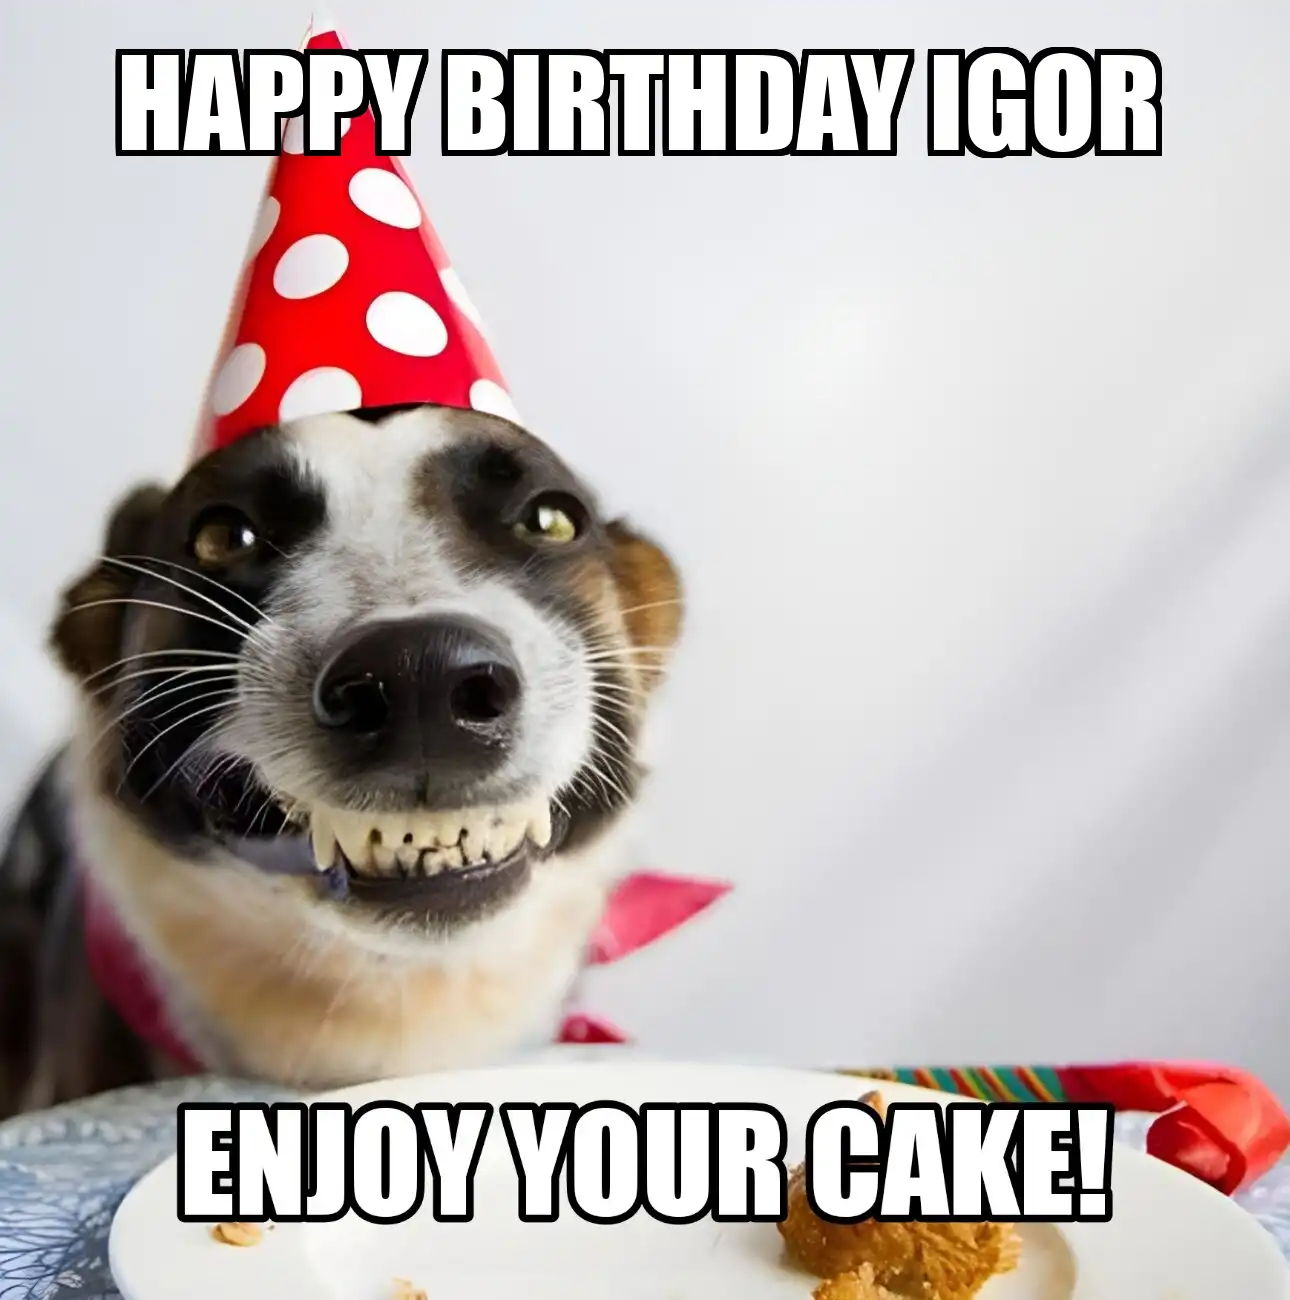 Happy Birthday Igor Enjoy Your Cake Dog Meme